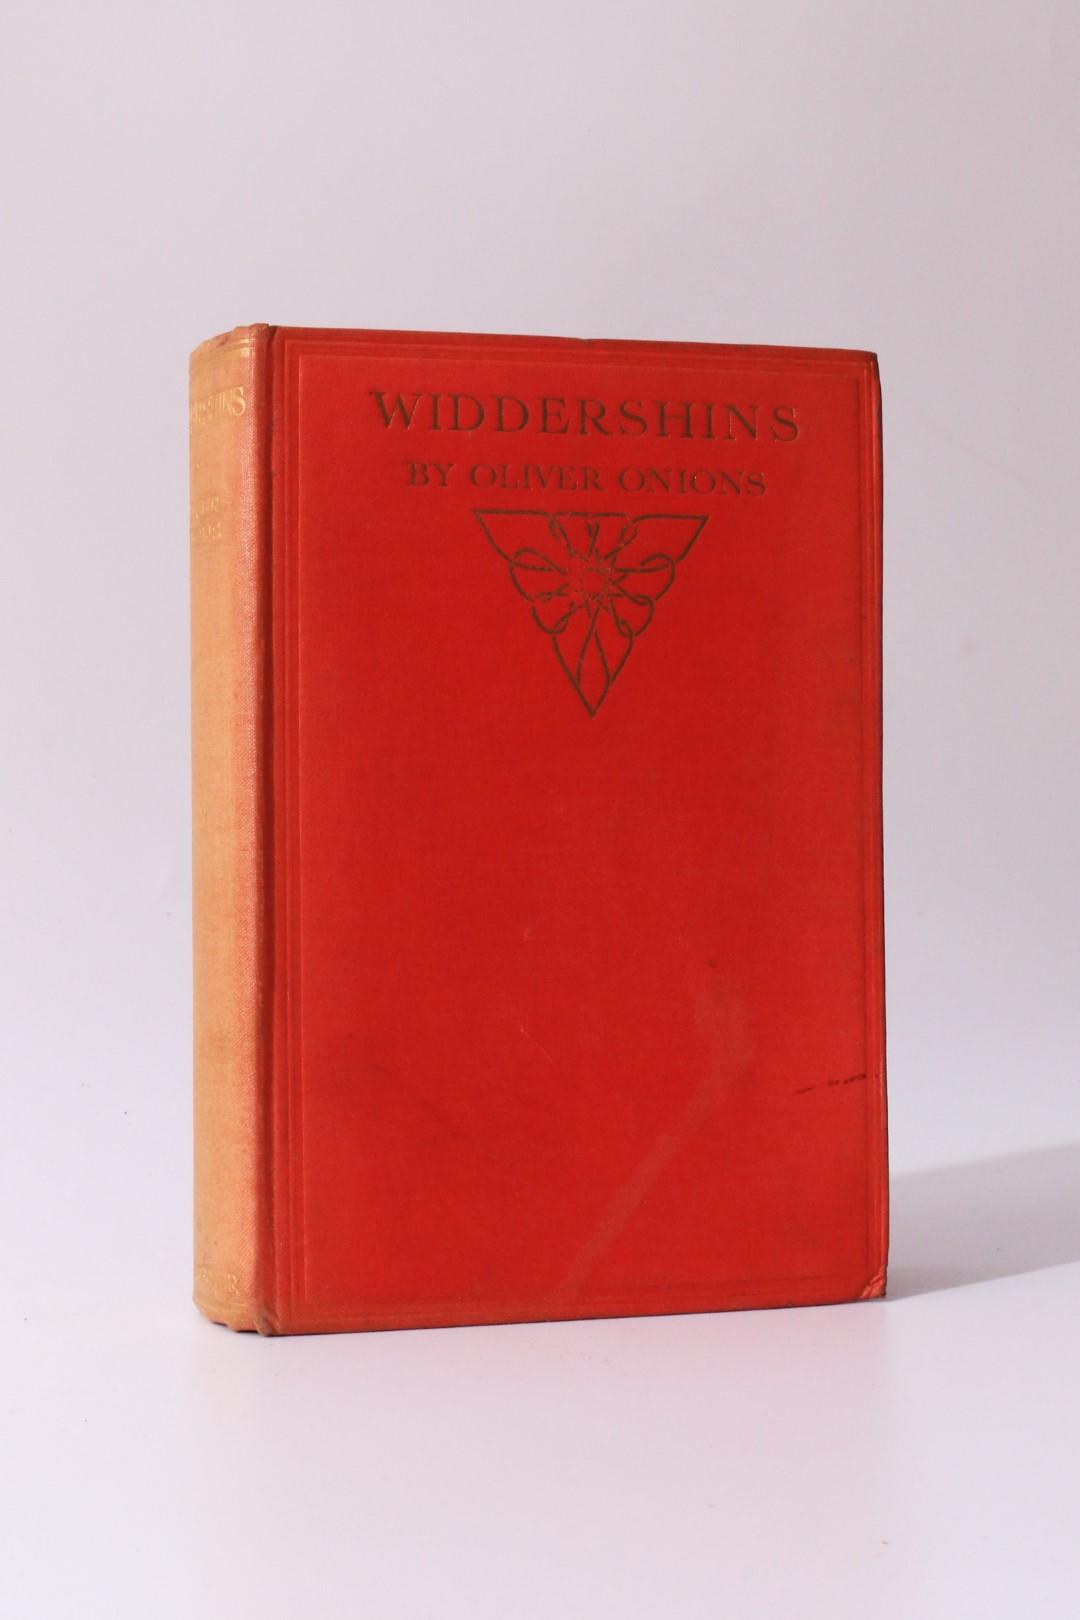 Oliver Onions - Widdershins - Martin Secker, 1911, First Edition.